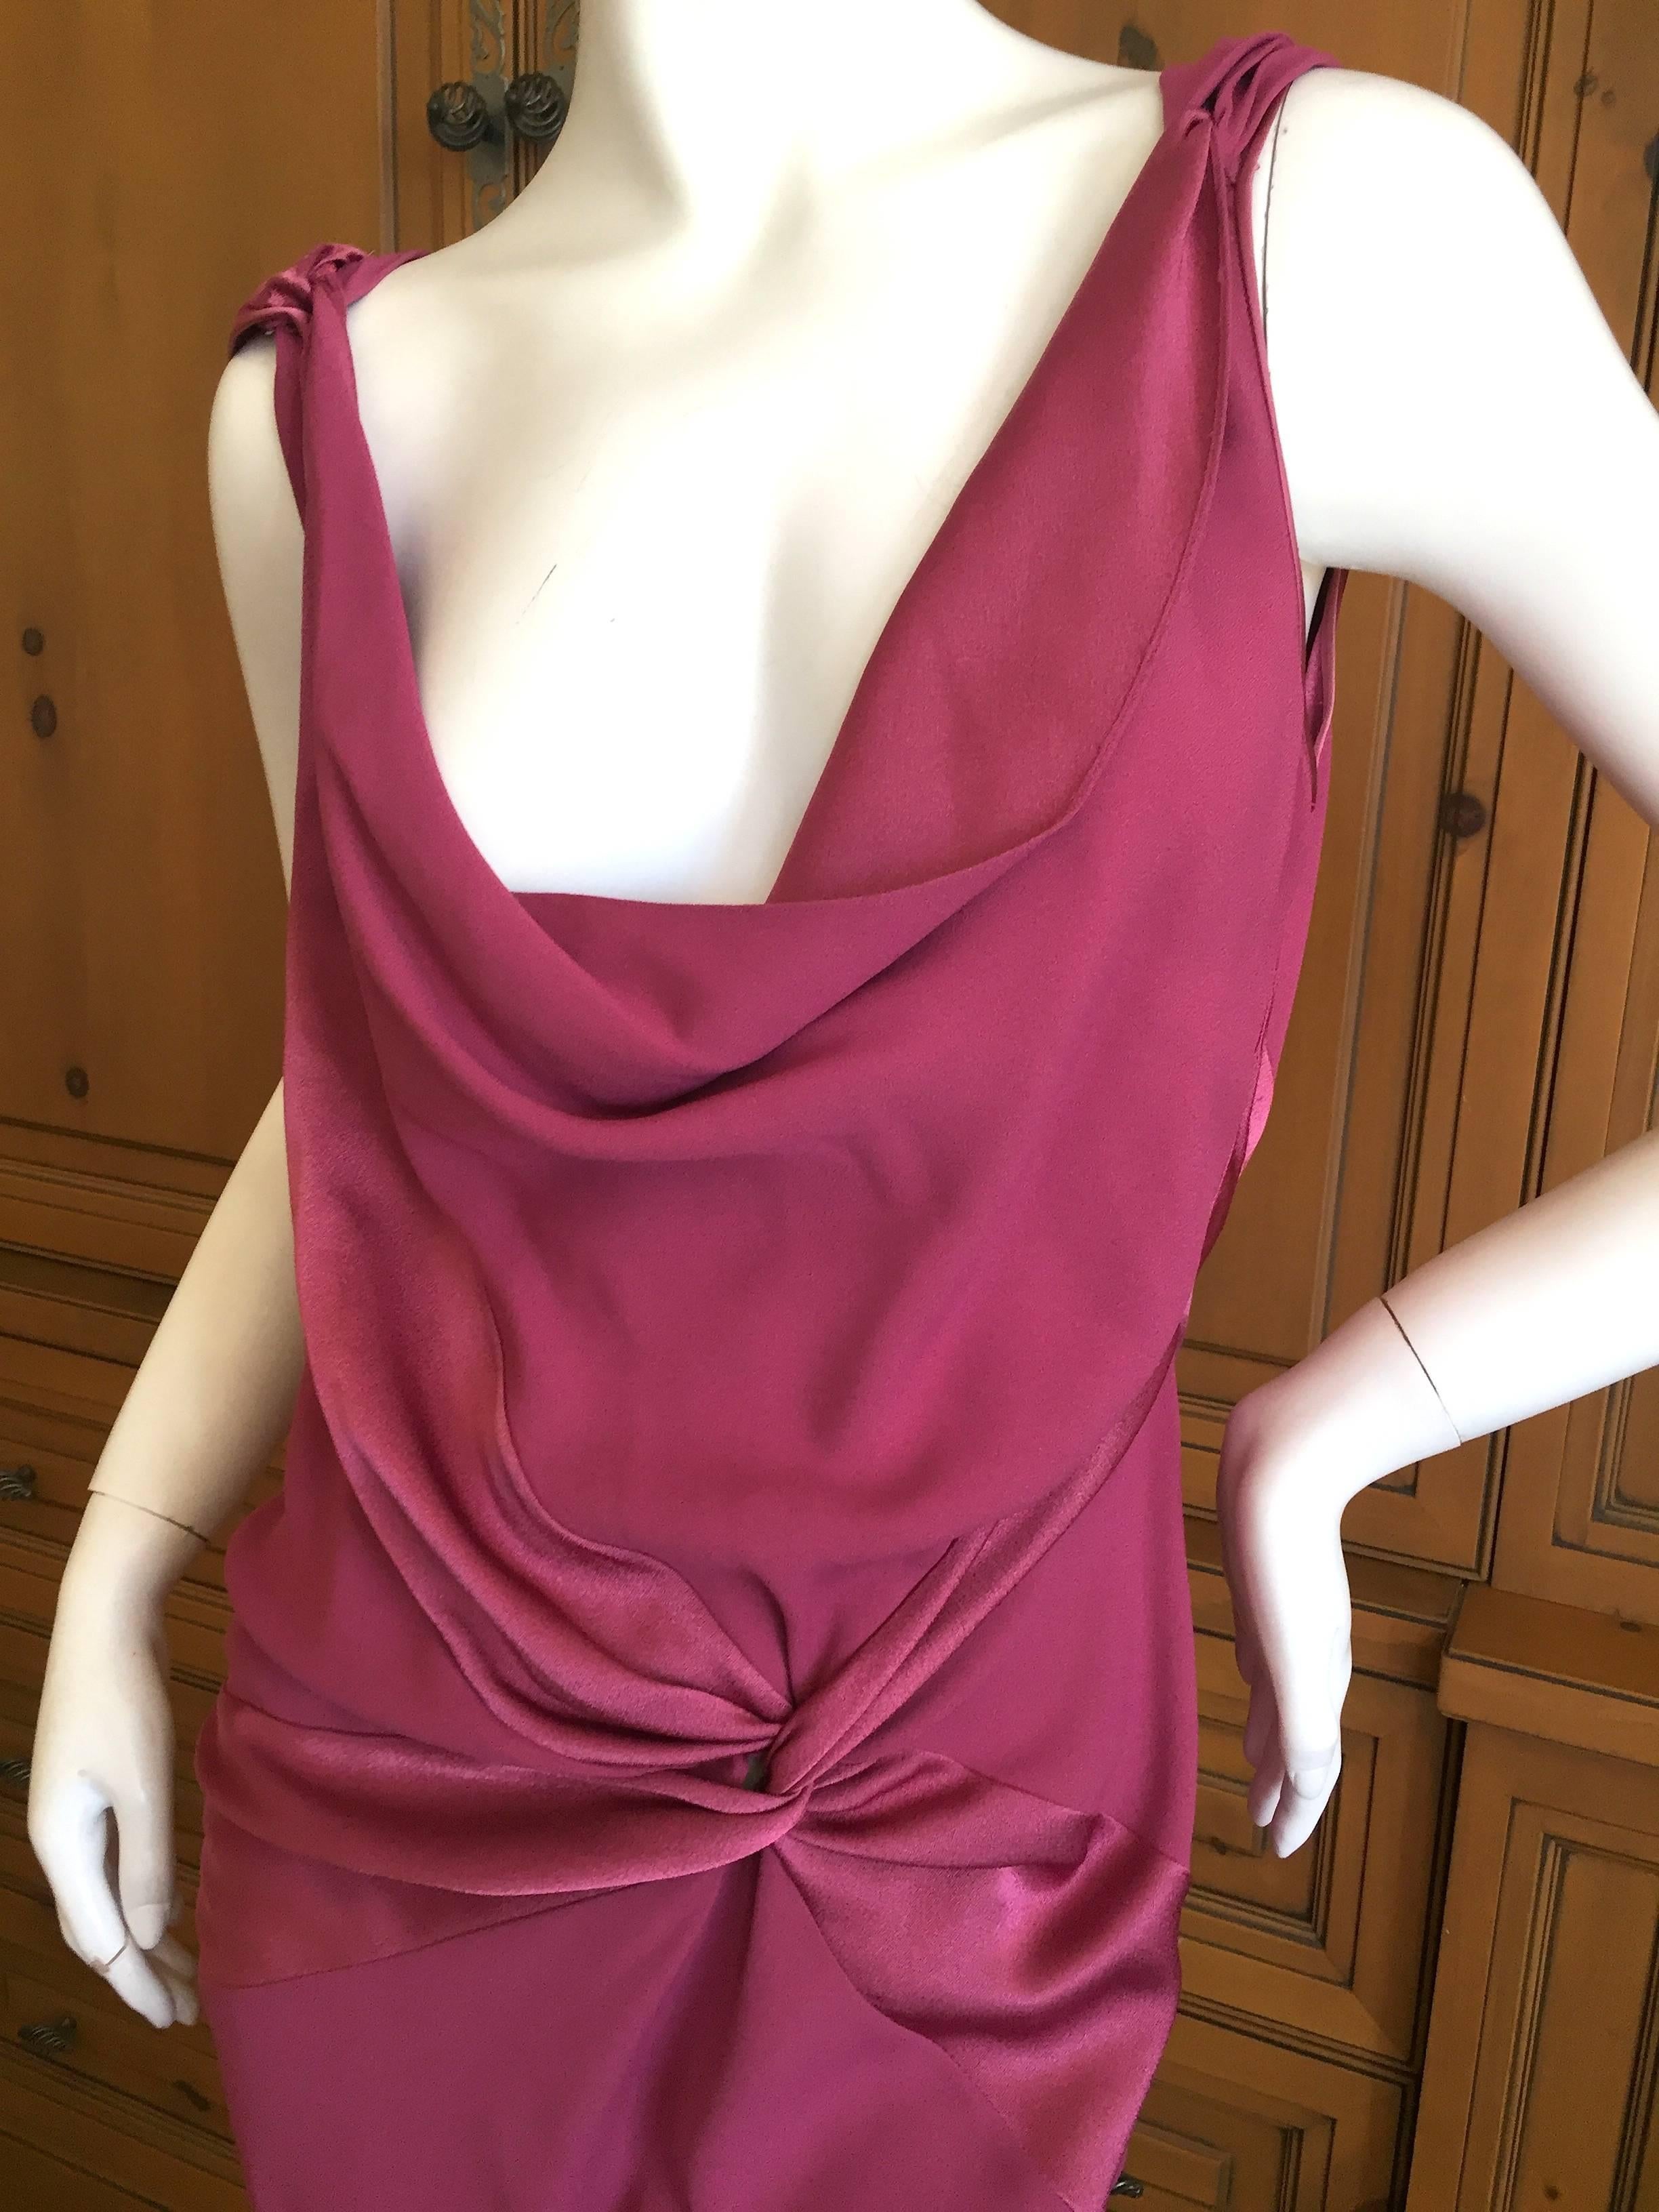 John Galliano Raspberry Dress with Satin Inserts .
Bust 36”, Waist 32”, Hip 36”, Length 41.5